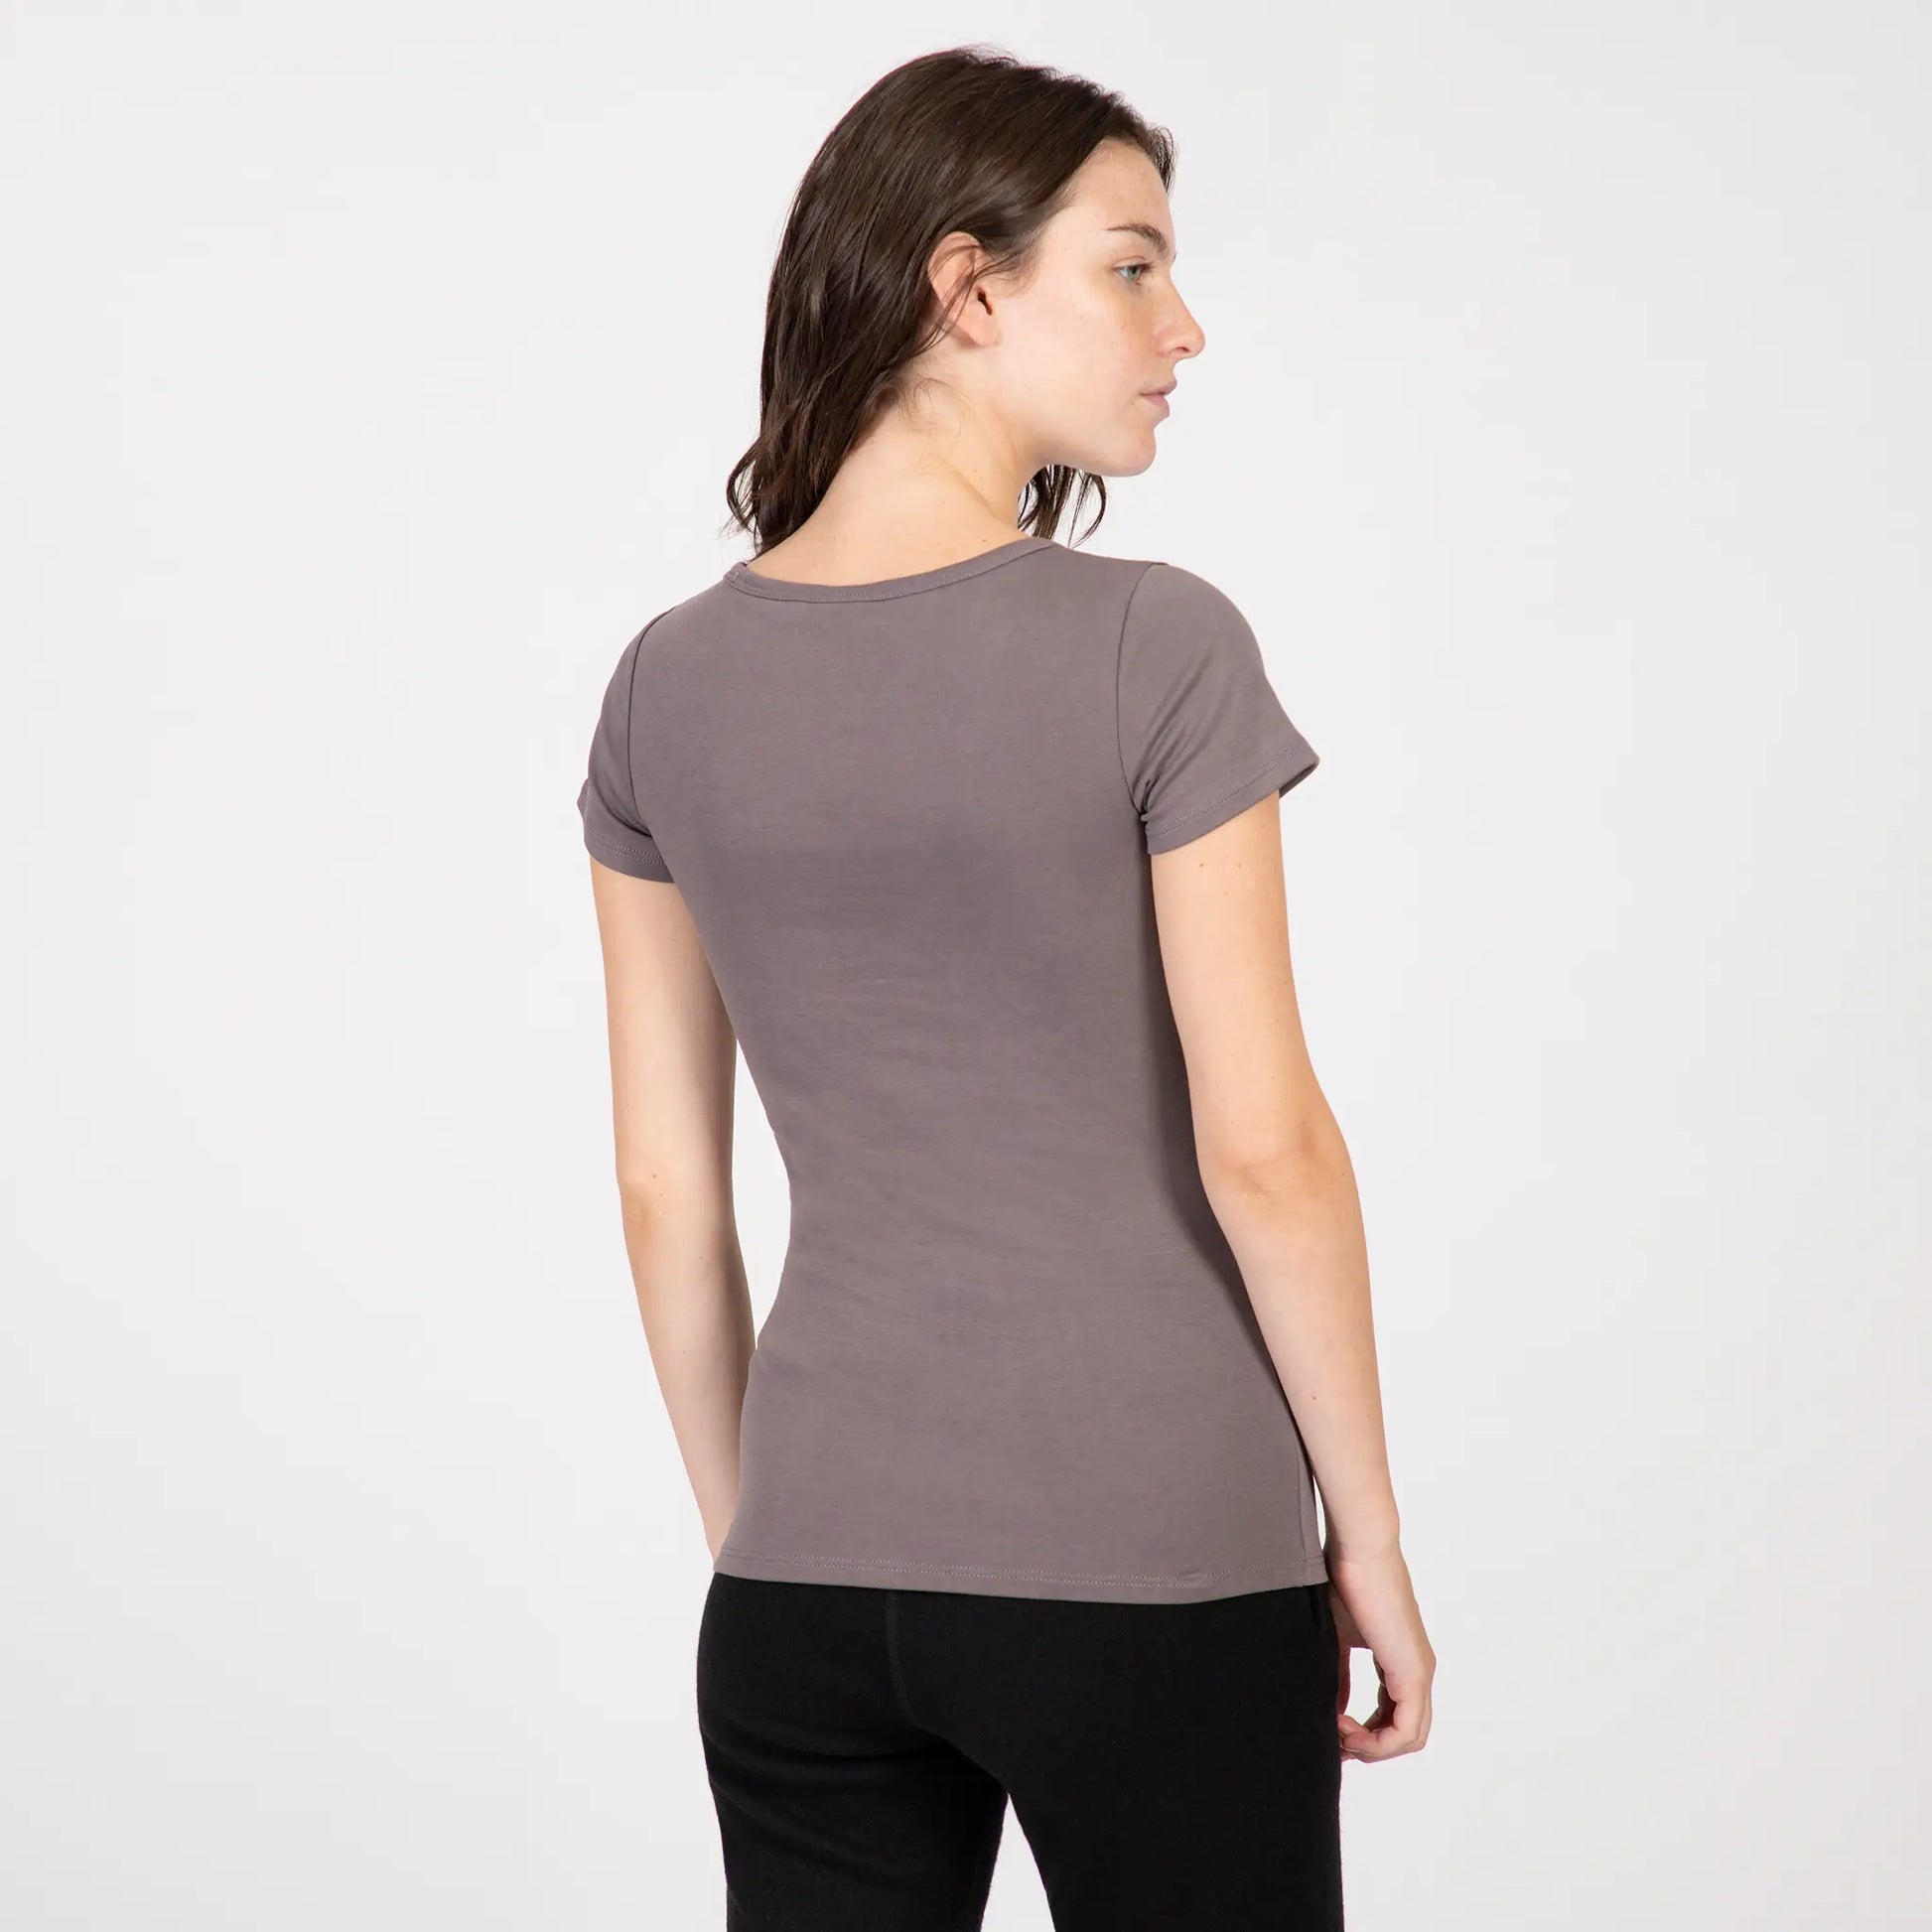 womens no microplastic tshirt crew neck color natural gray